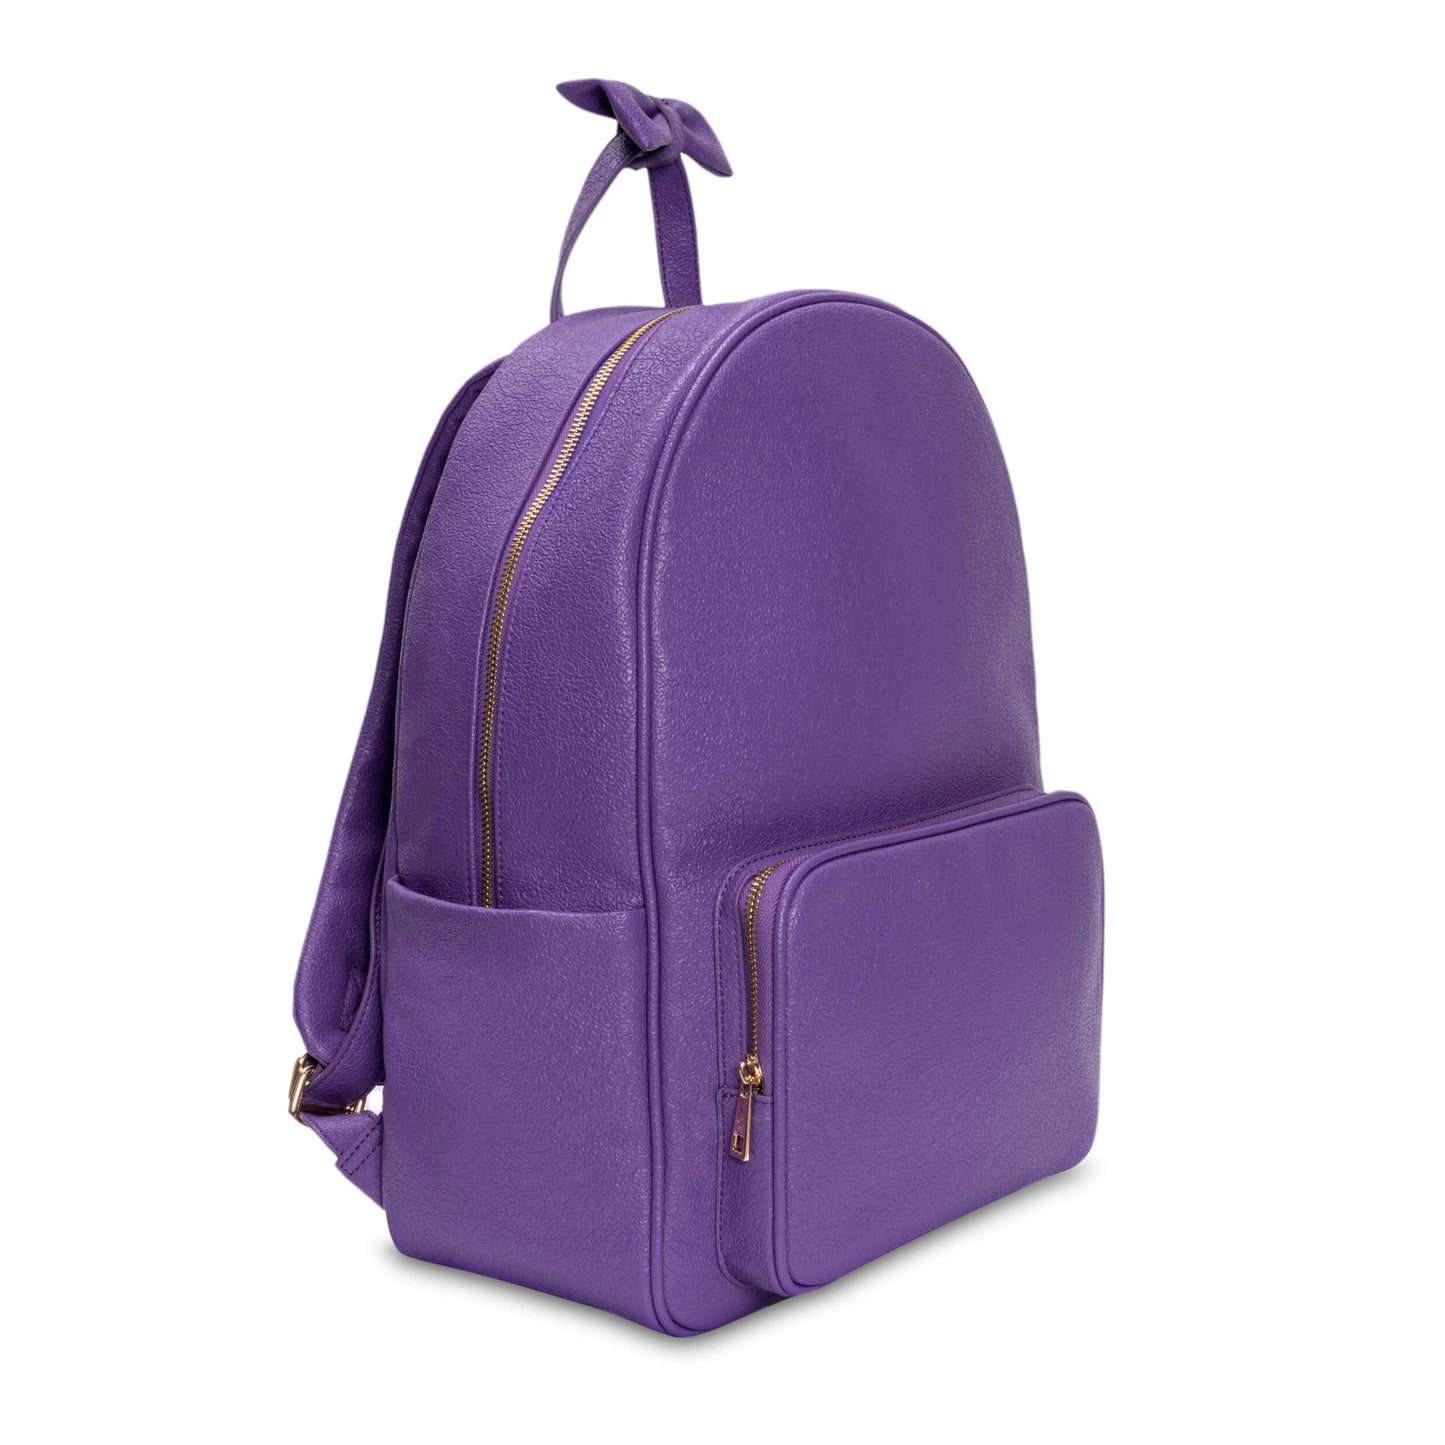 The Taly Backpack - Joyful Purple